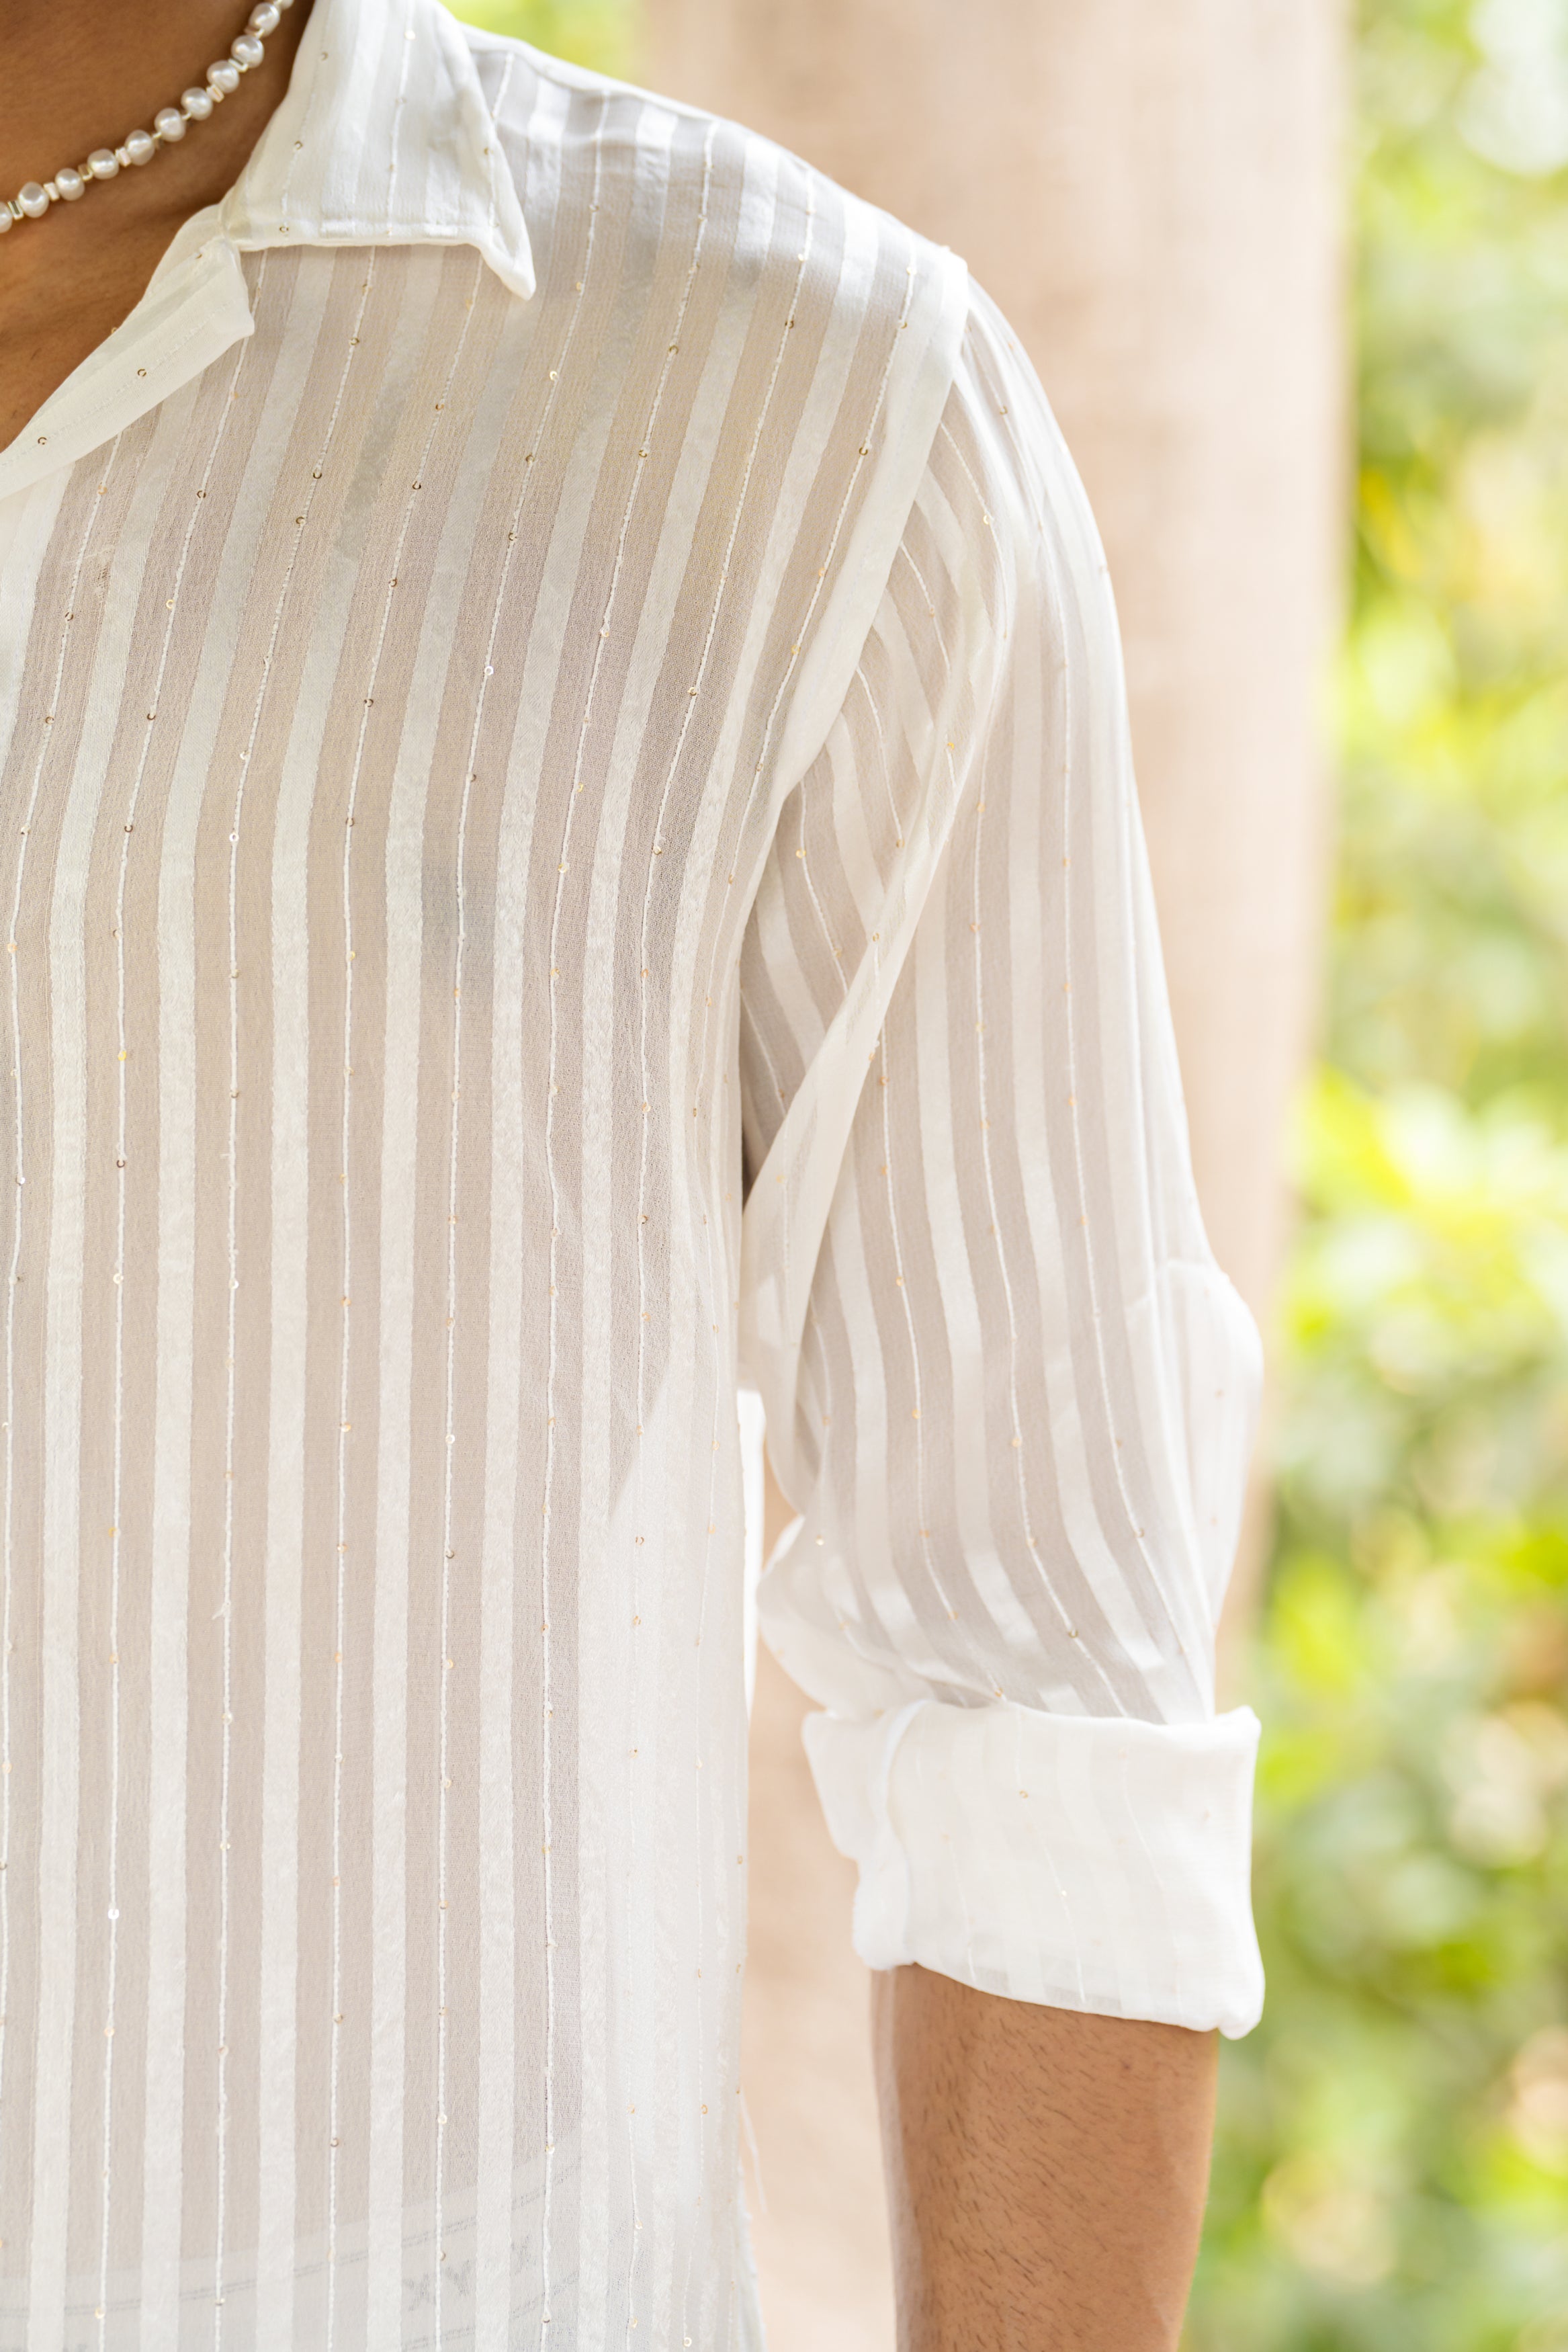 Firangi Yarn Relaxed Spread Collar Semi Sheer Satin Striped Mens Party Shirt - White